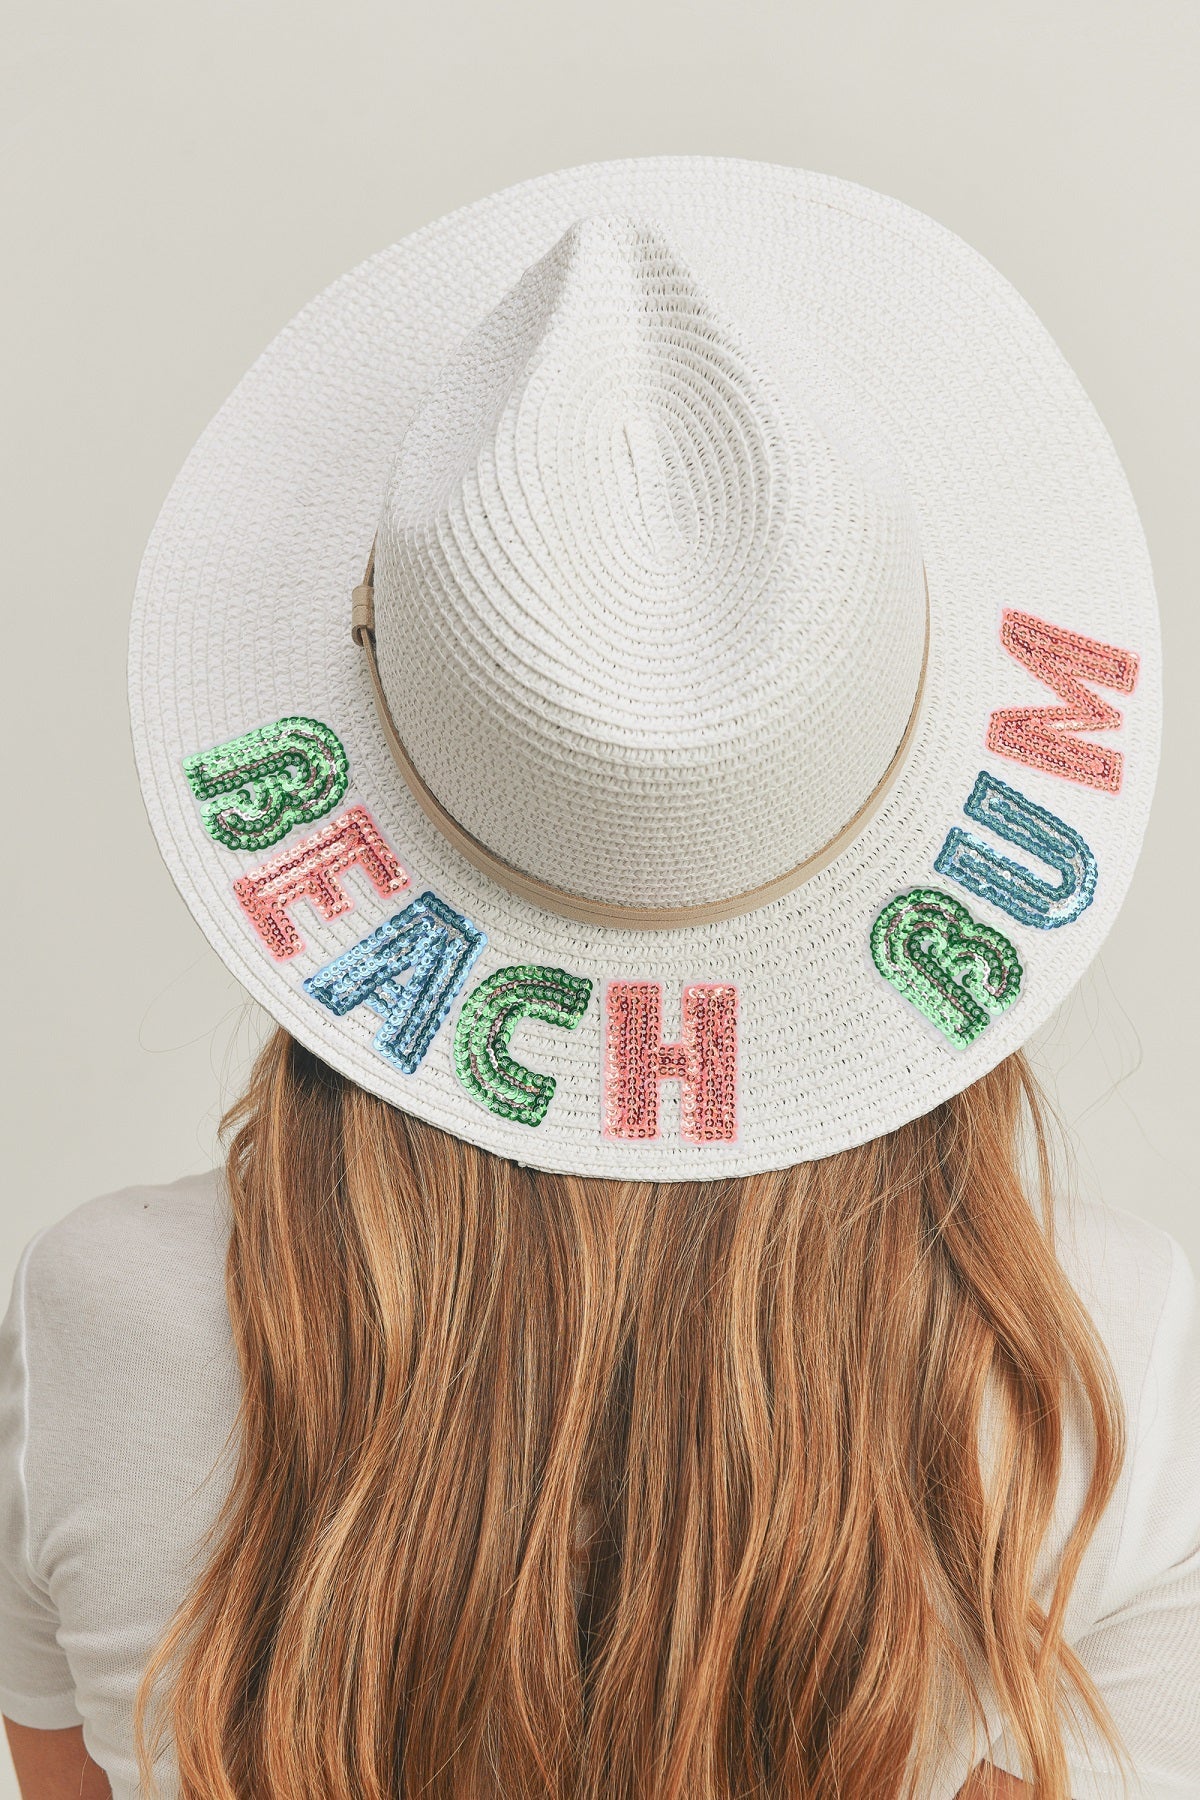 MH0115 Sequin Letter "Beach Bum" Panama Hat